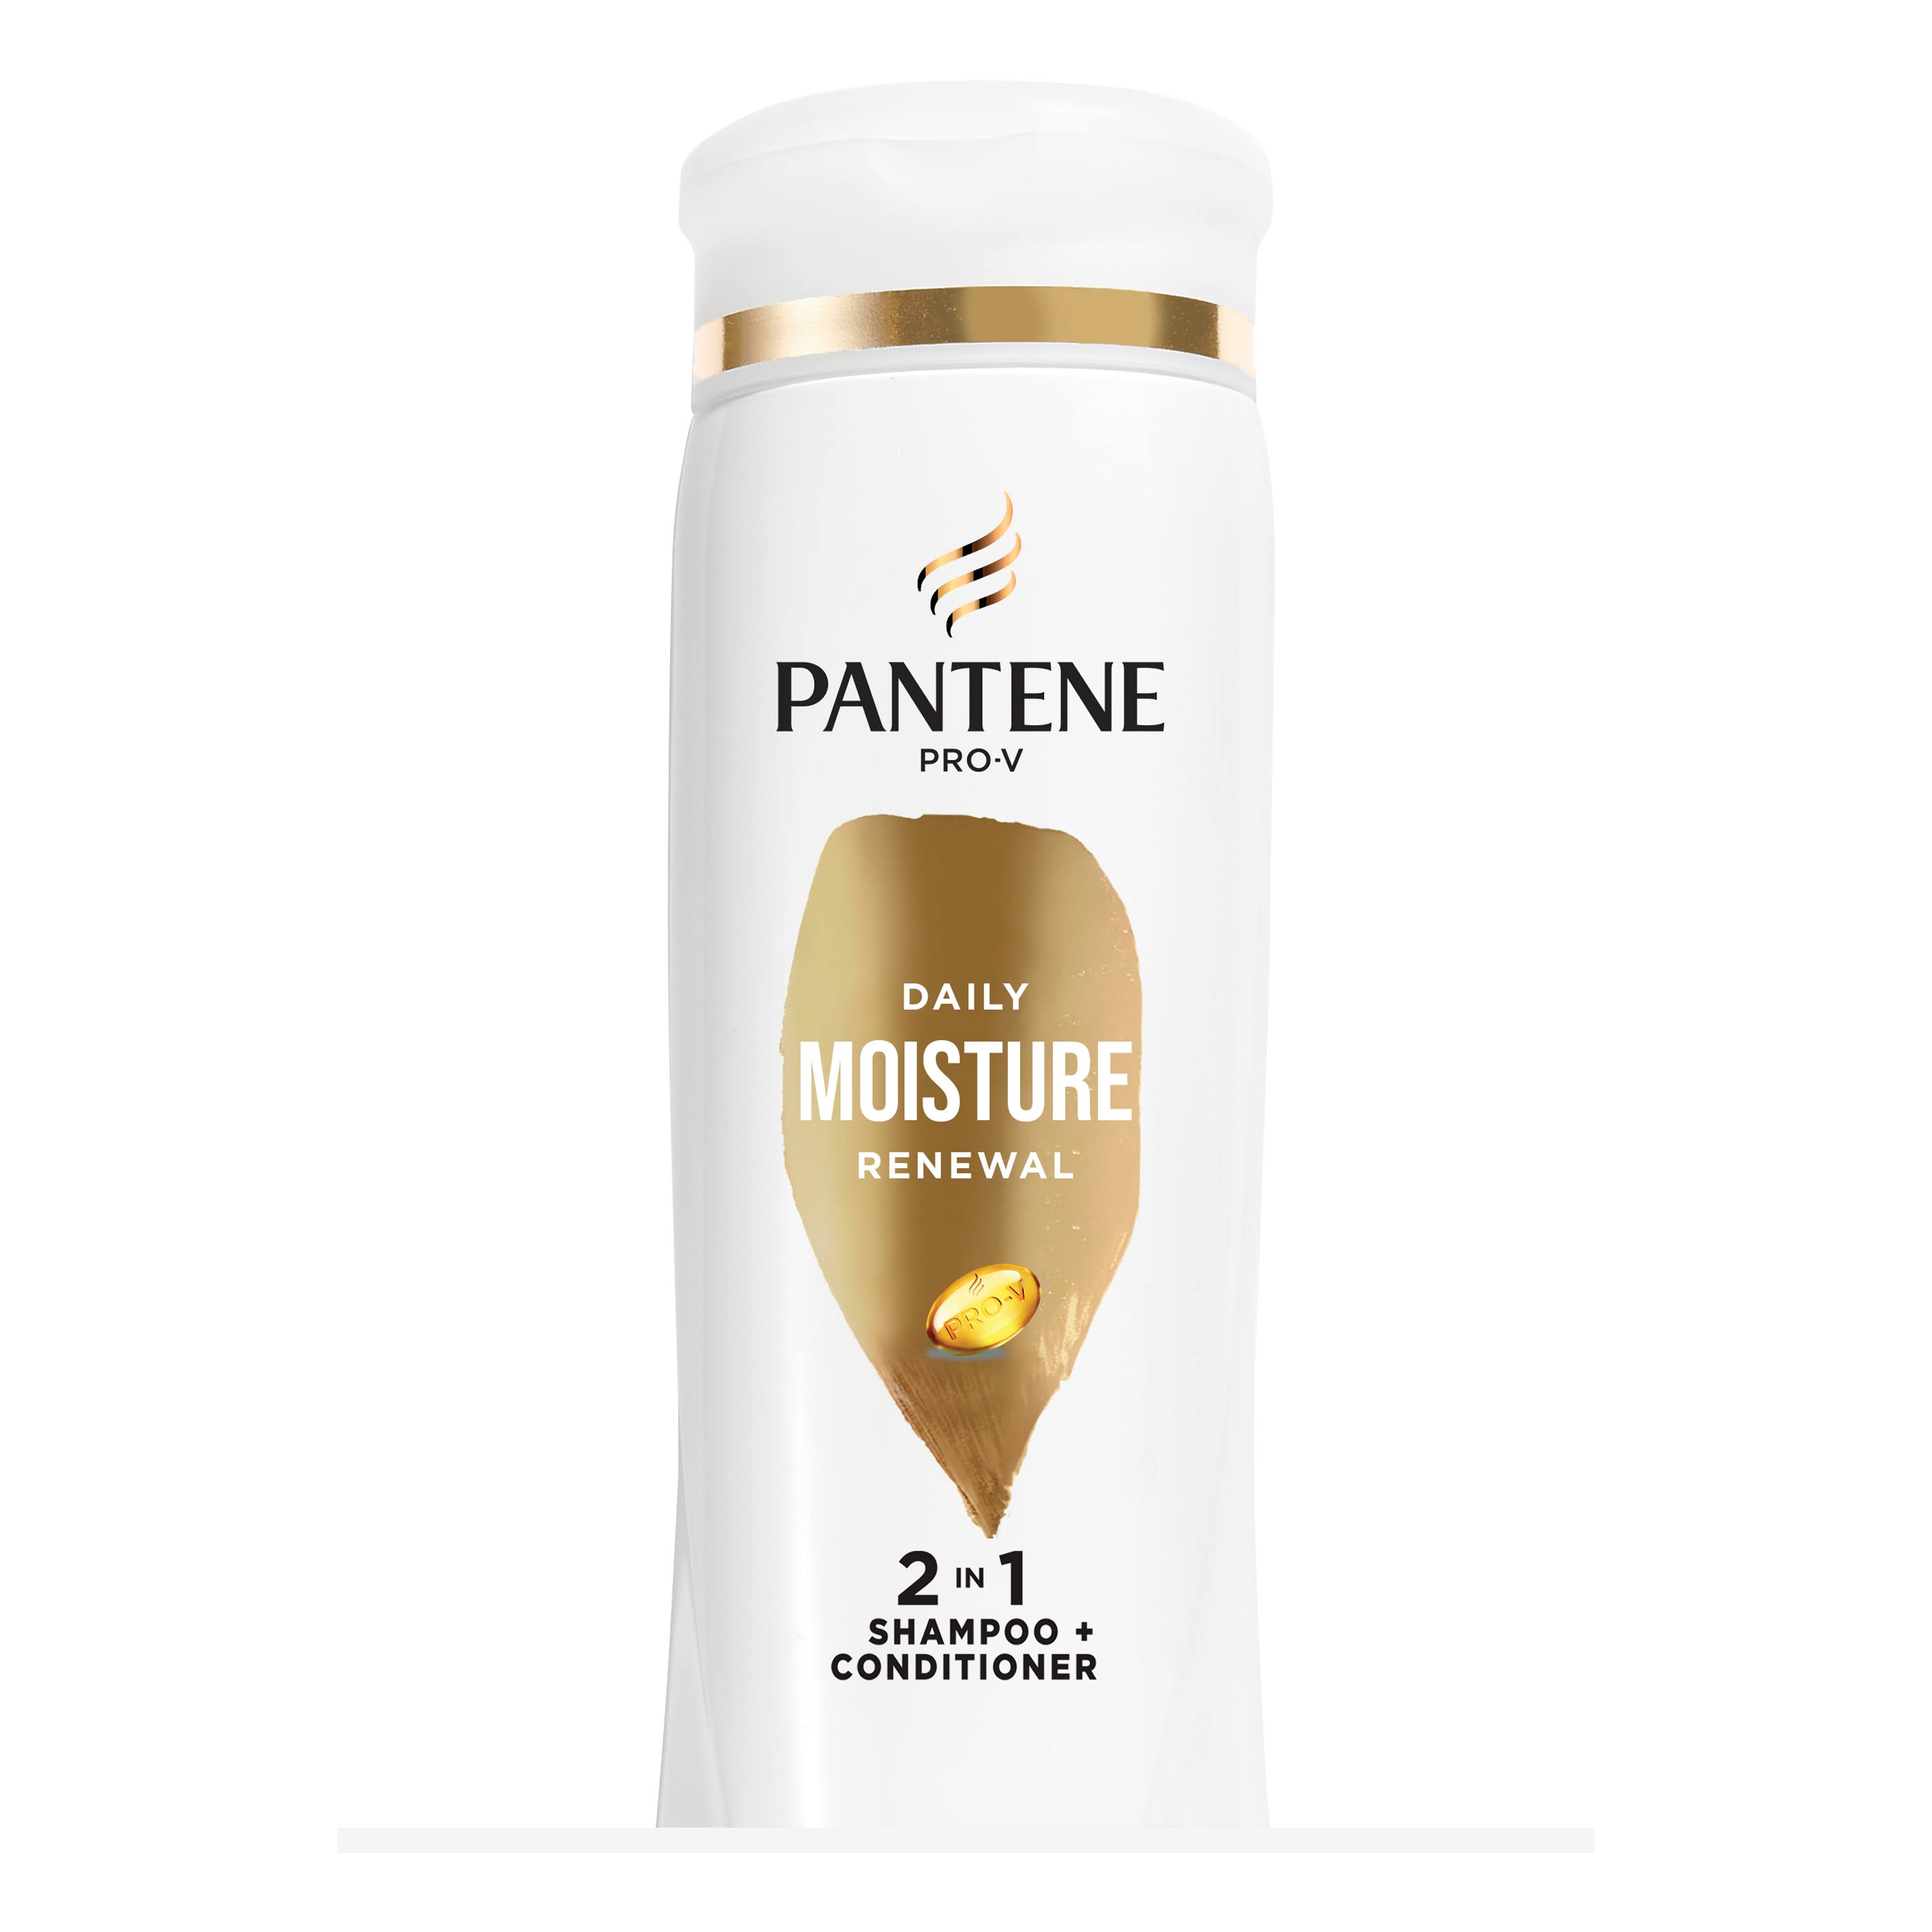 Pantene Pro-V Shampoo + Conditioner, 2 in 1, Daily Moisture Renewal - 355 ml